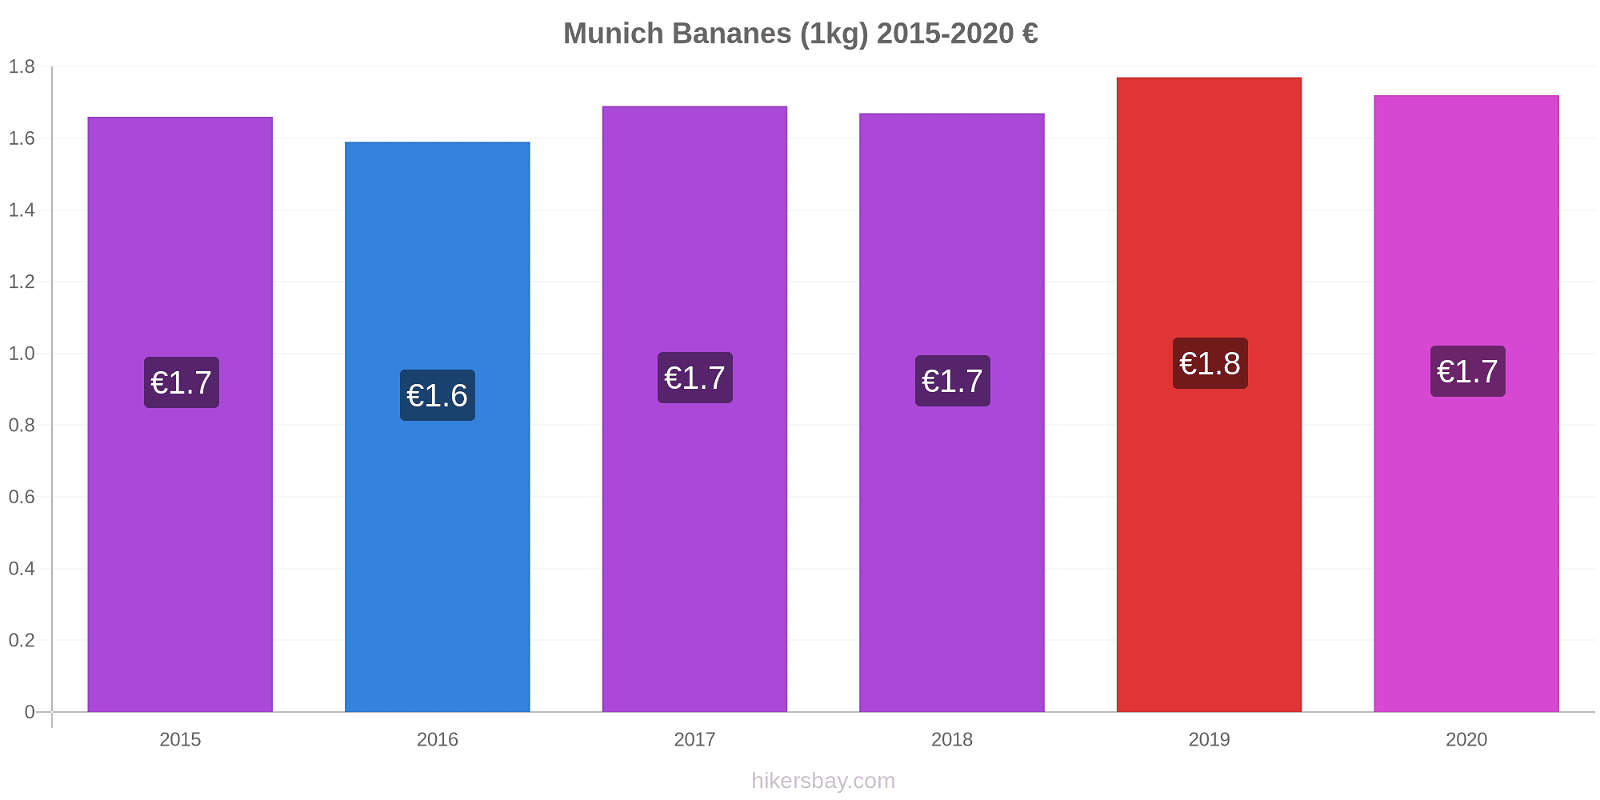 Munich changements de prix Bananes (1kg) hikersbay.com